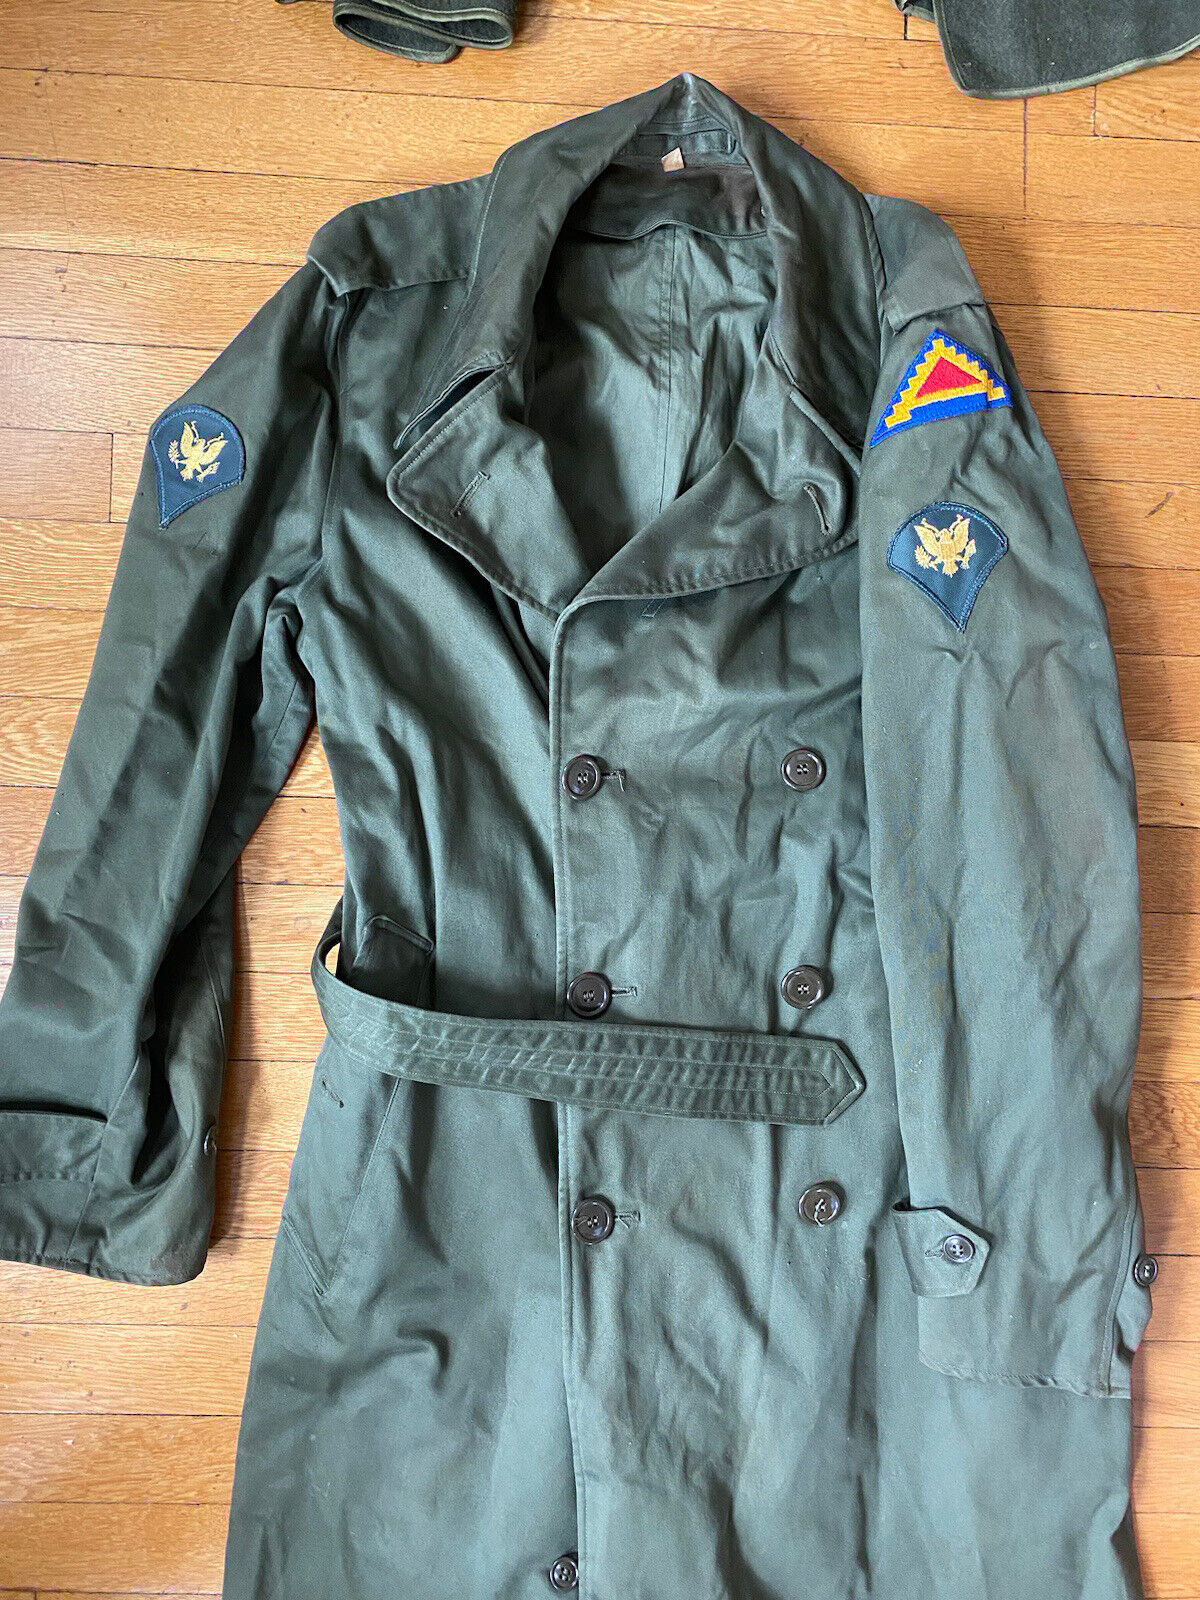 US ARMY Raincoat Mens Medium Military Trench Coat Green 1950’s Vietnam War Era